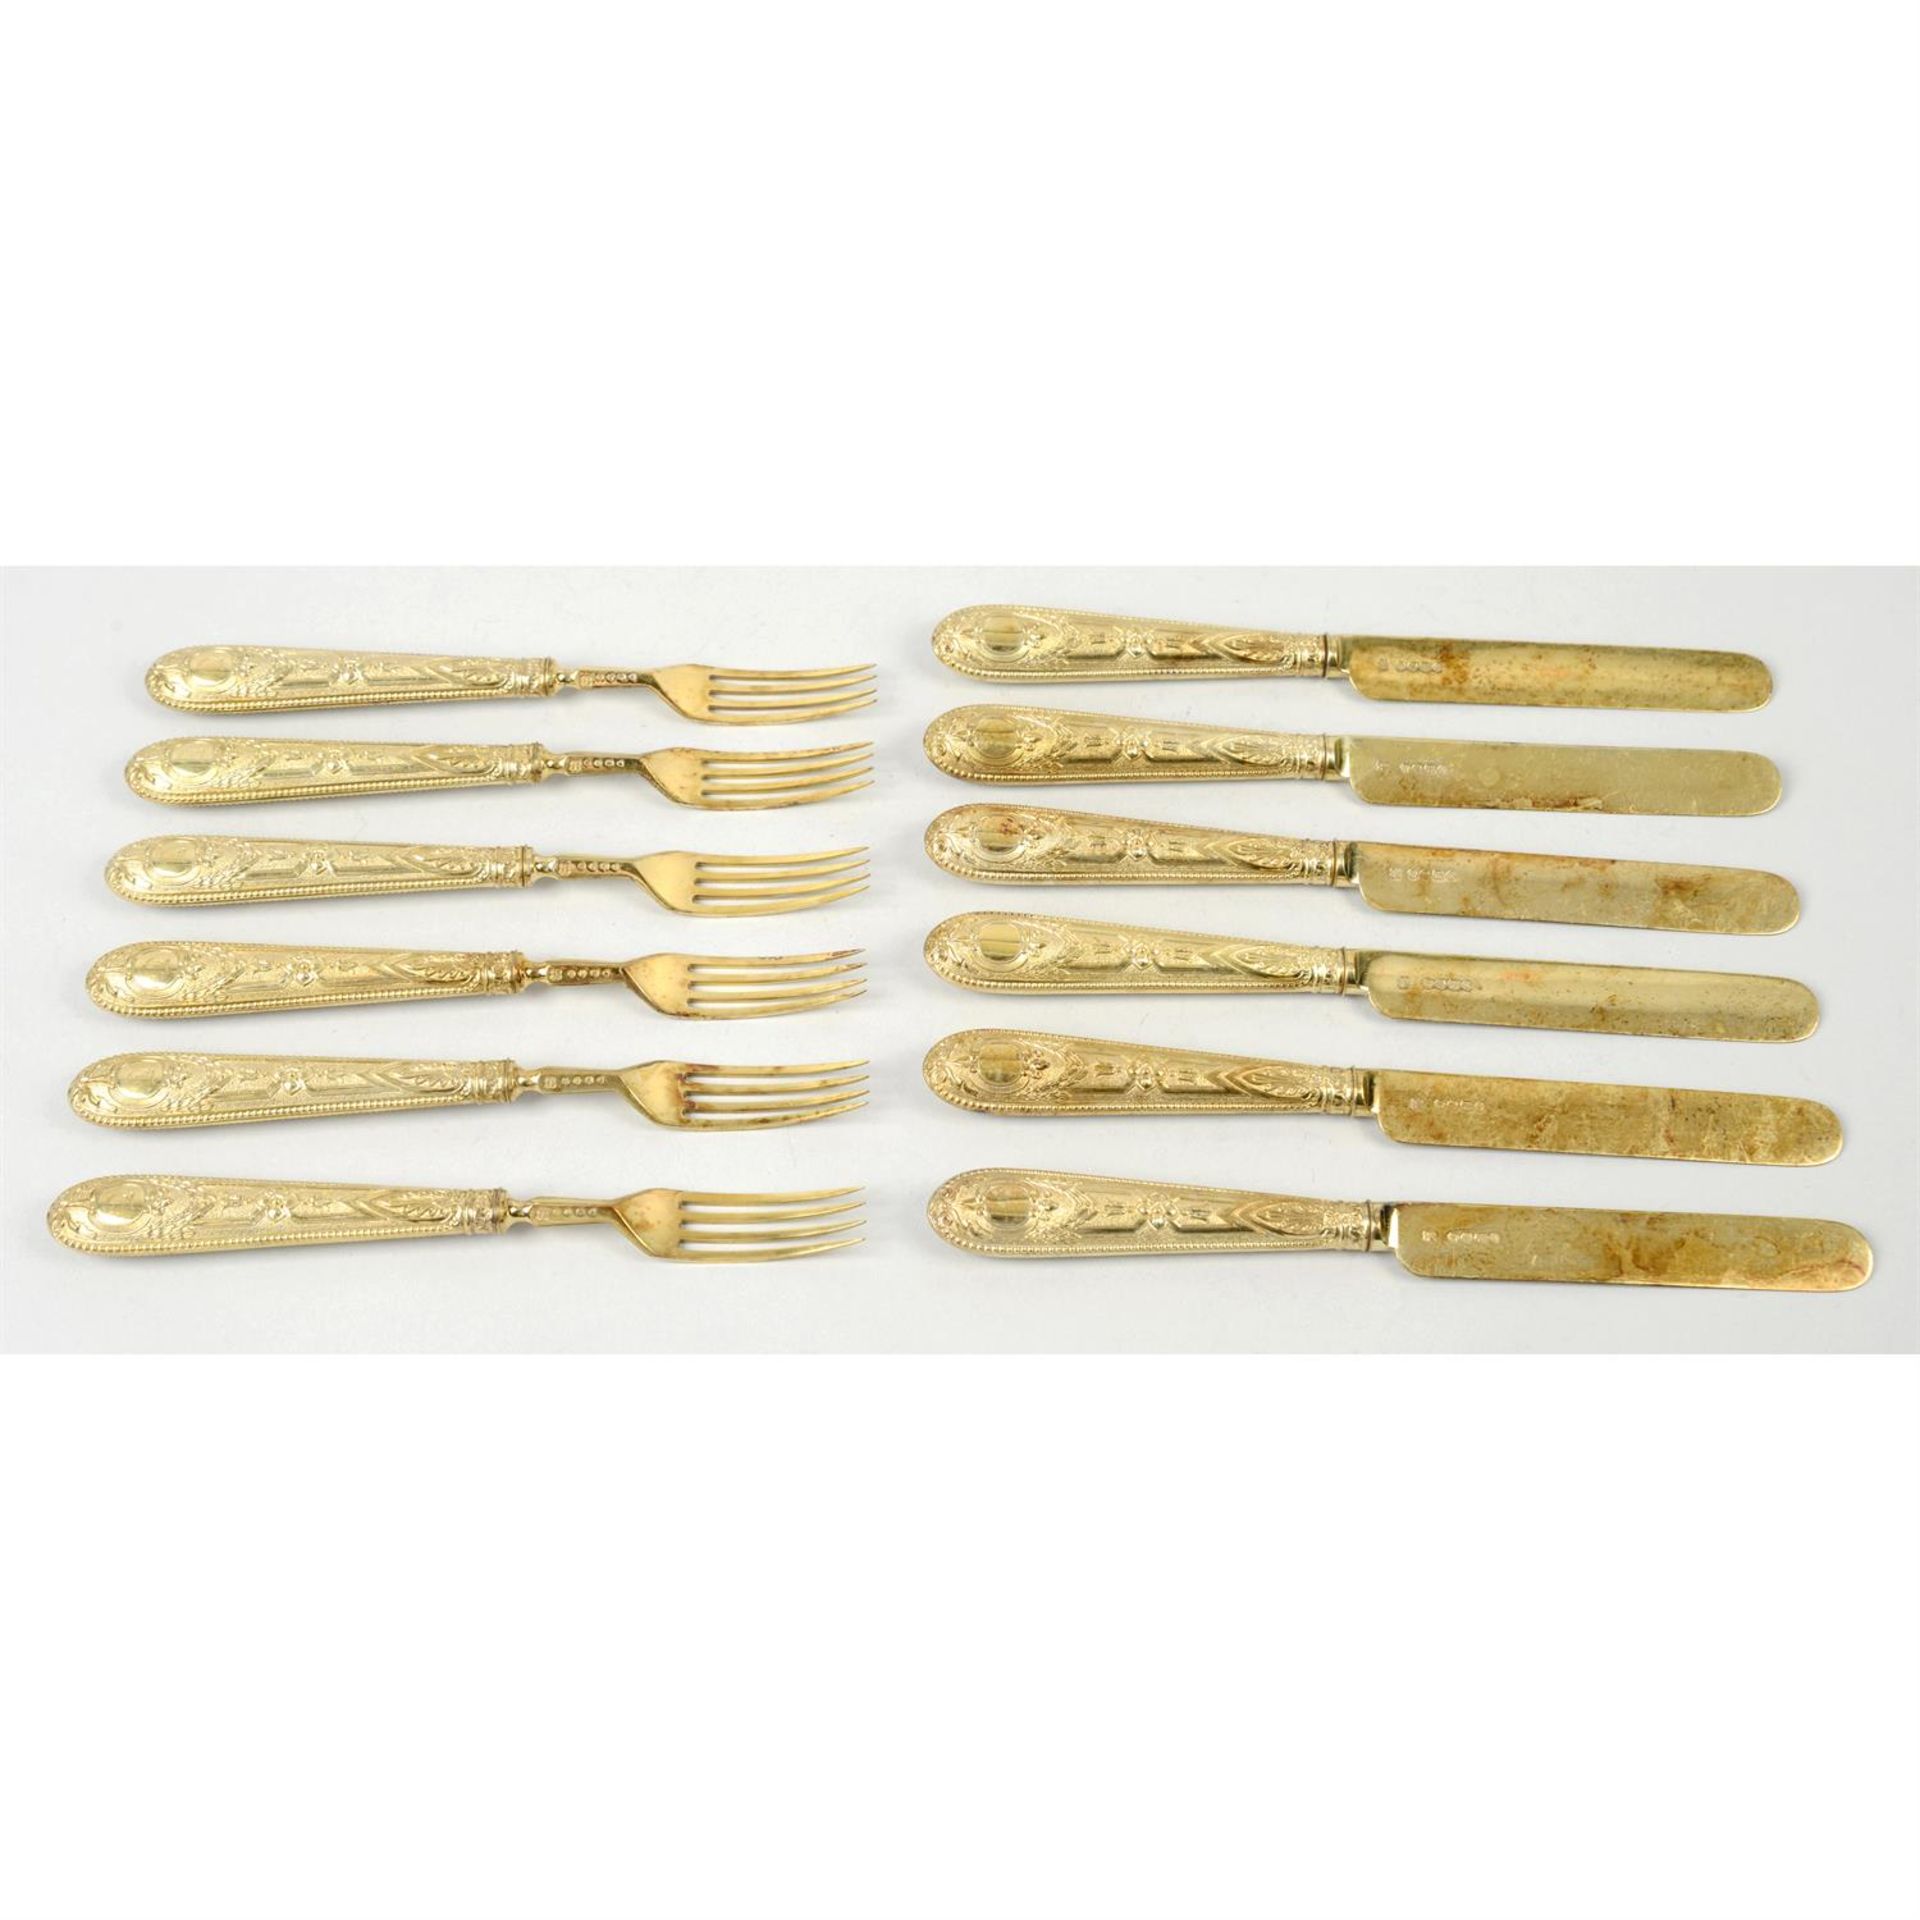 A set of Victorian silver-gilt knives & forks (22).